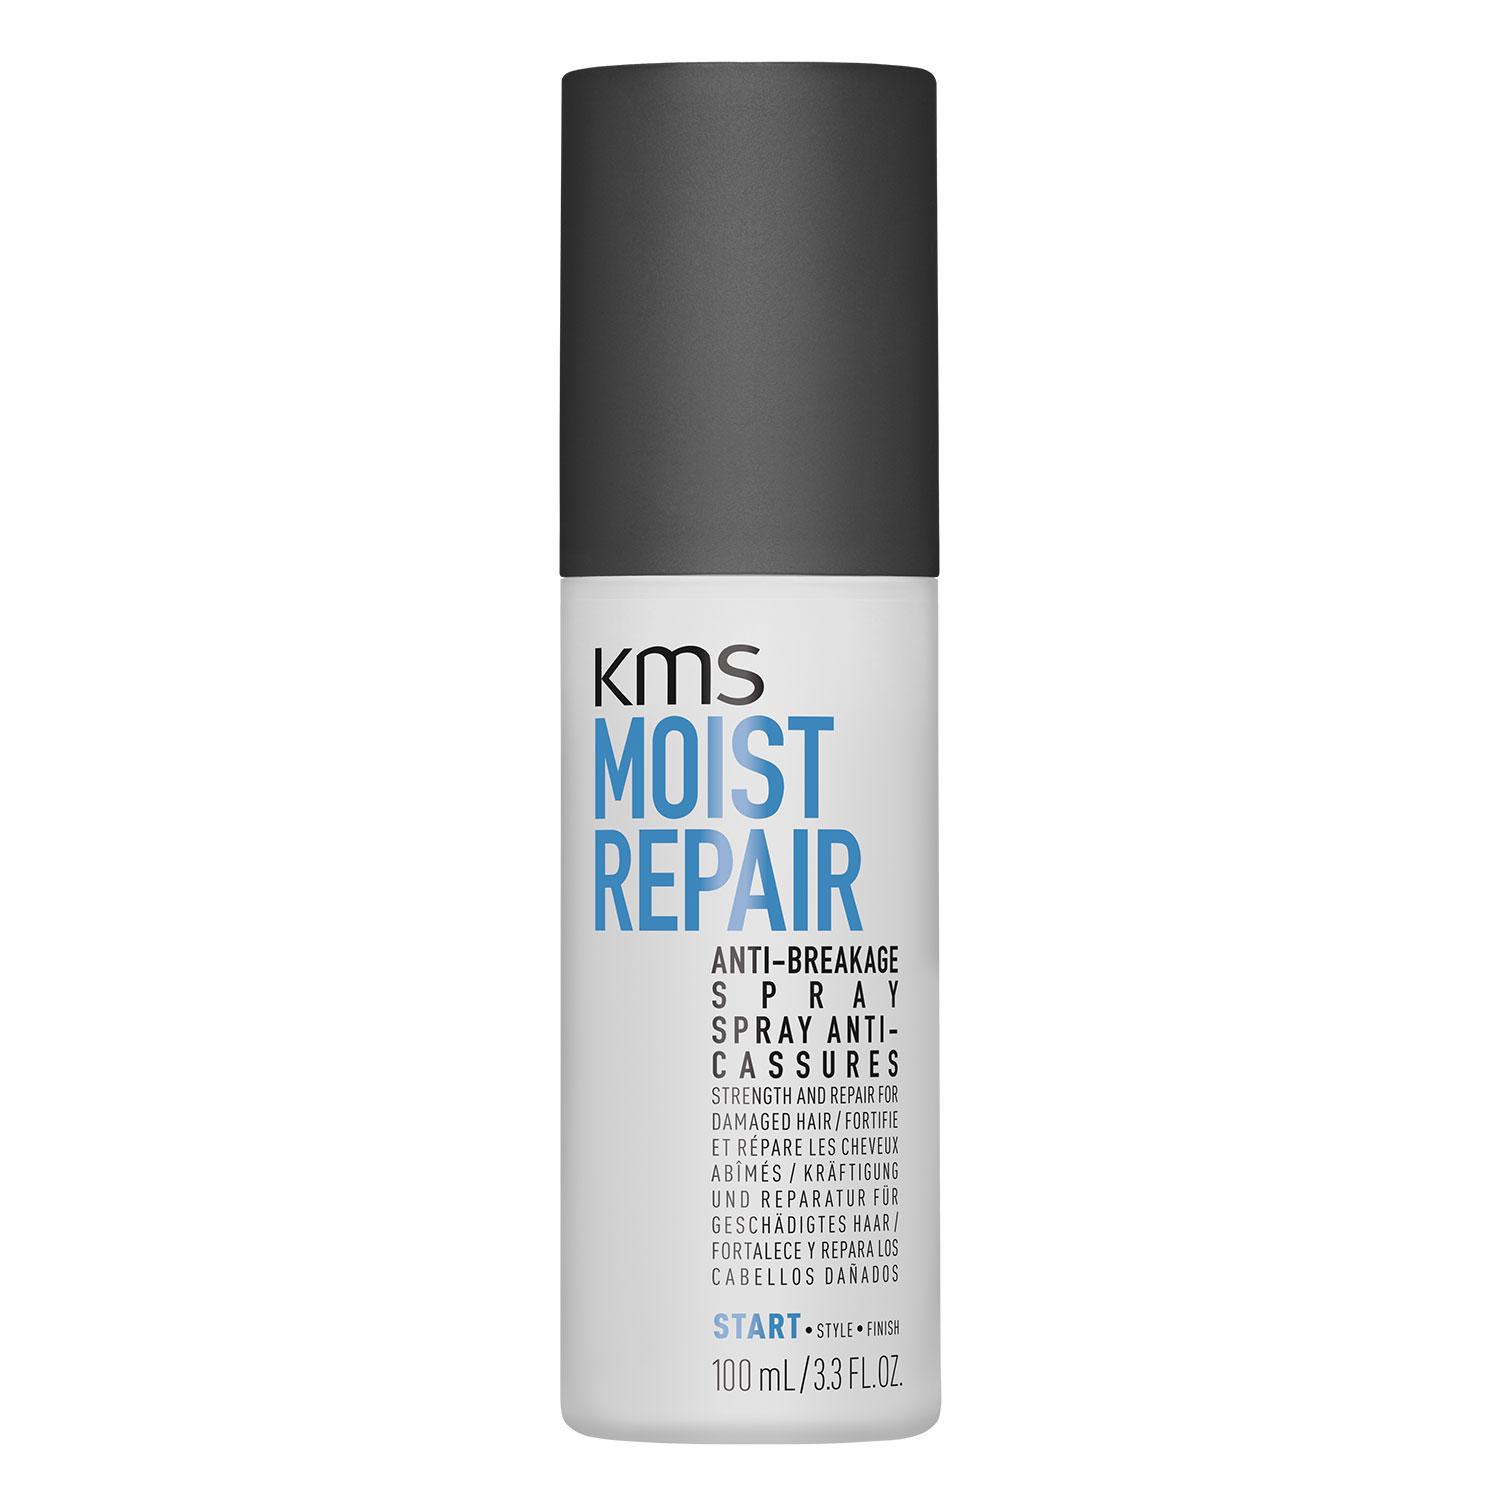 Moist Repair - Anti-Breakage Spray